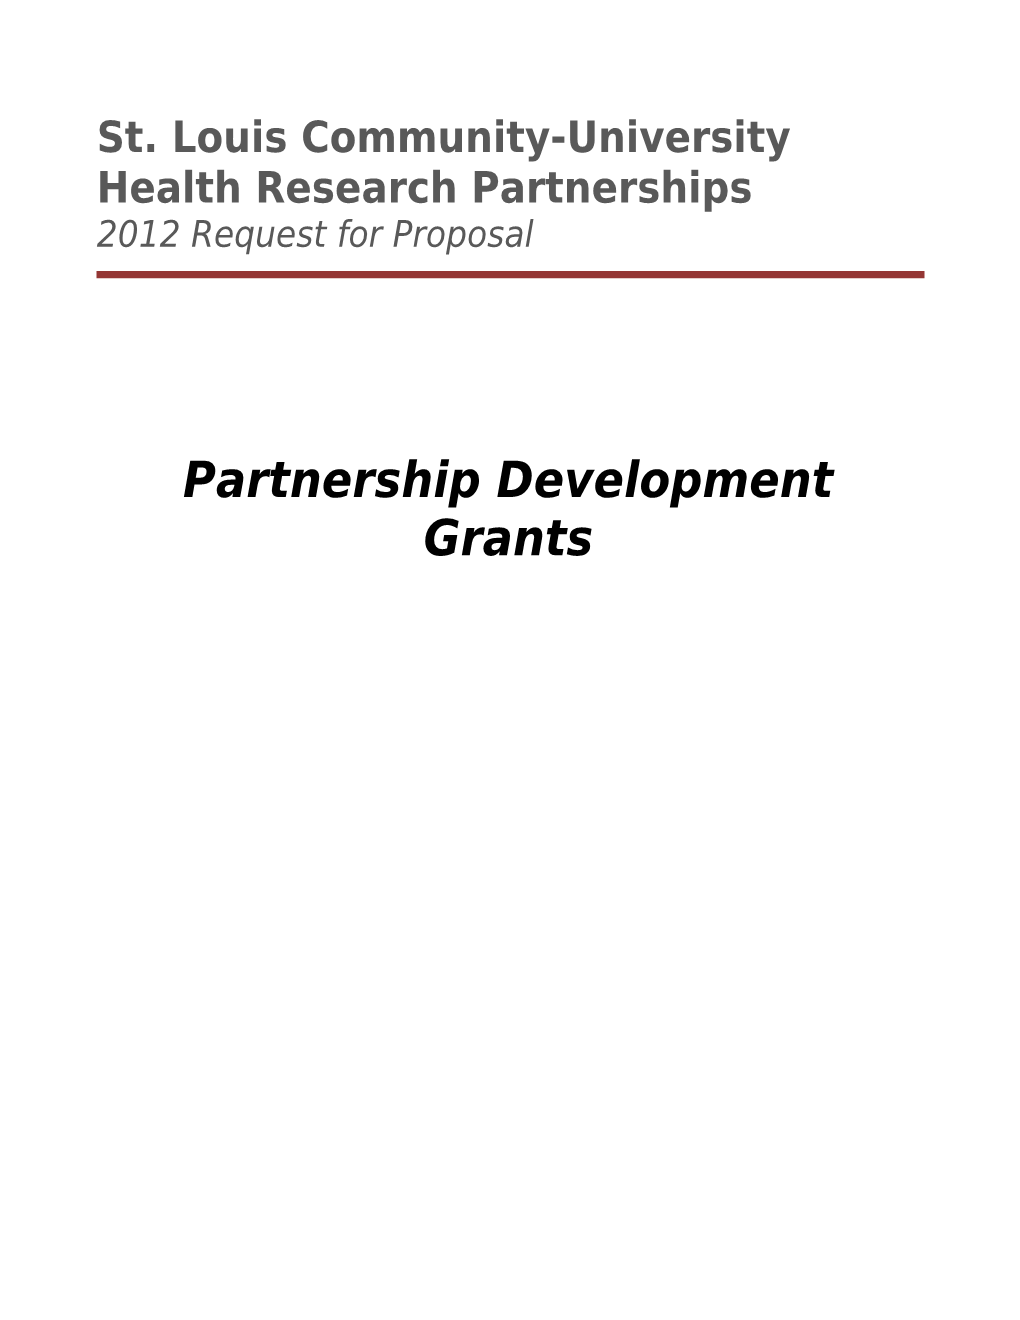 St. Louis Community-University Health Research Partnerships